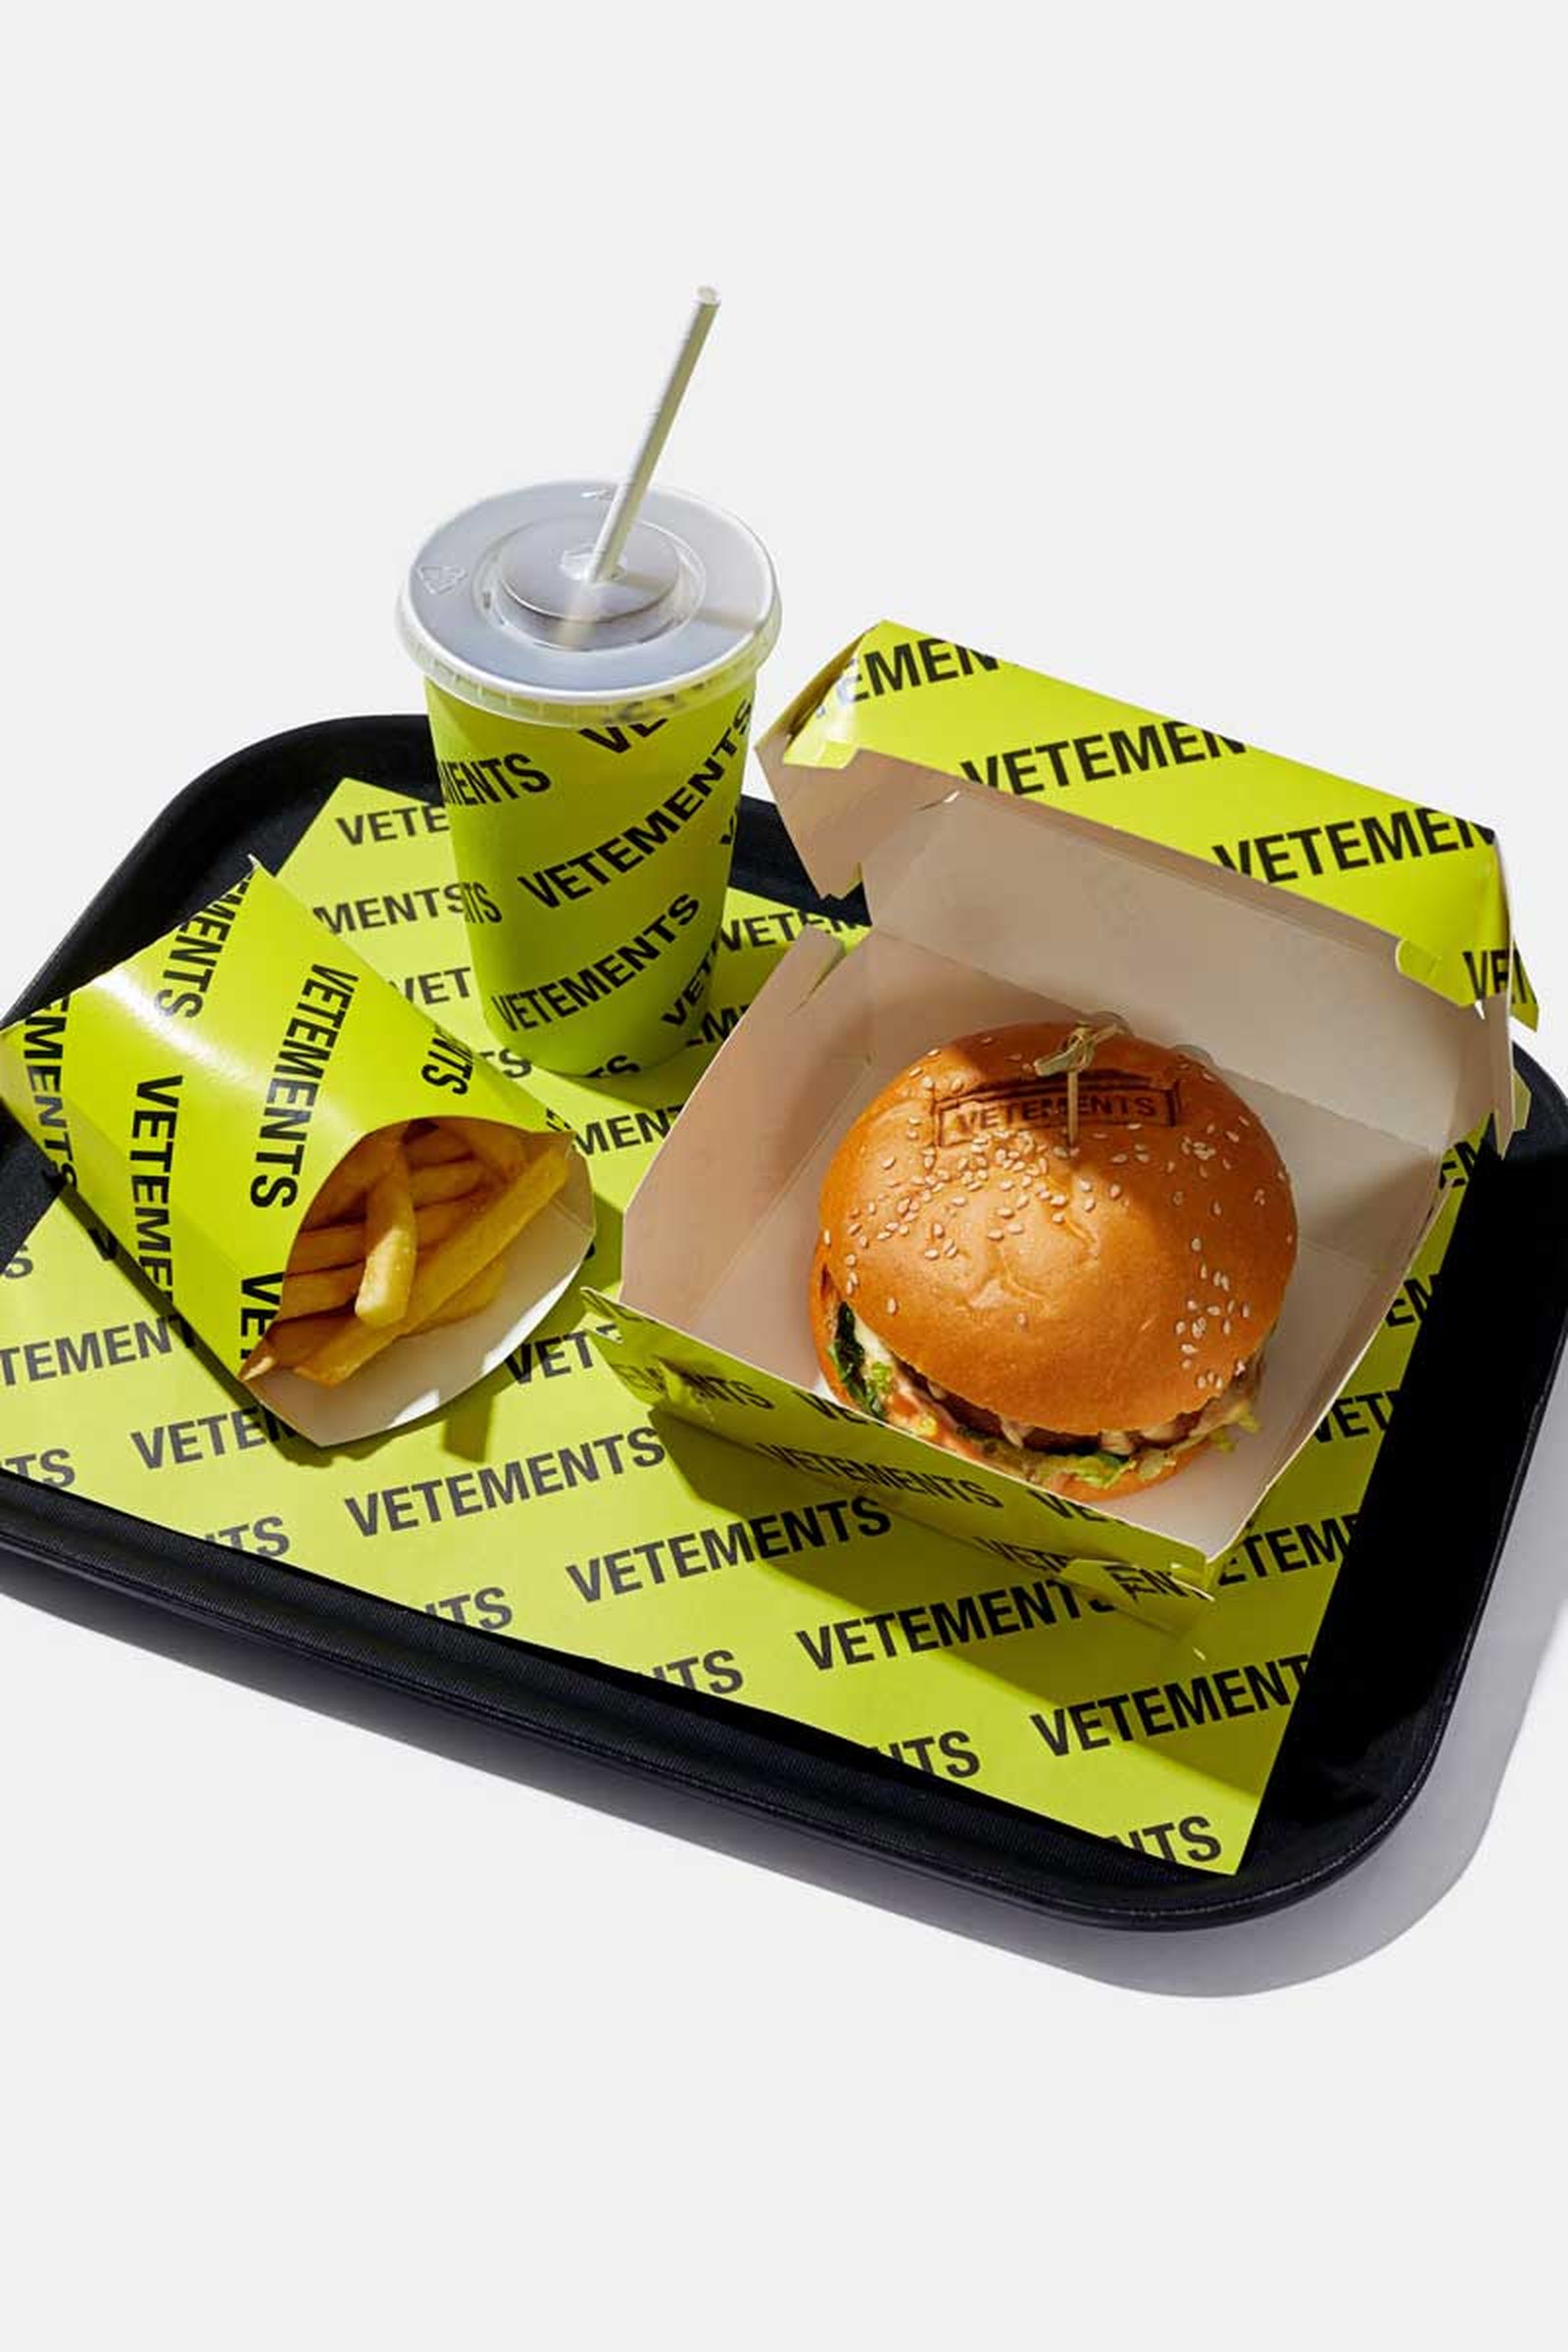 vetements-burger-2-next-level-edition--(5)